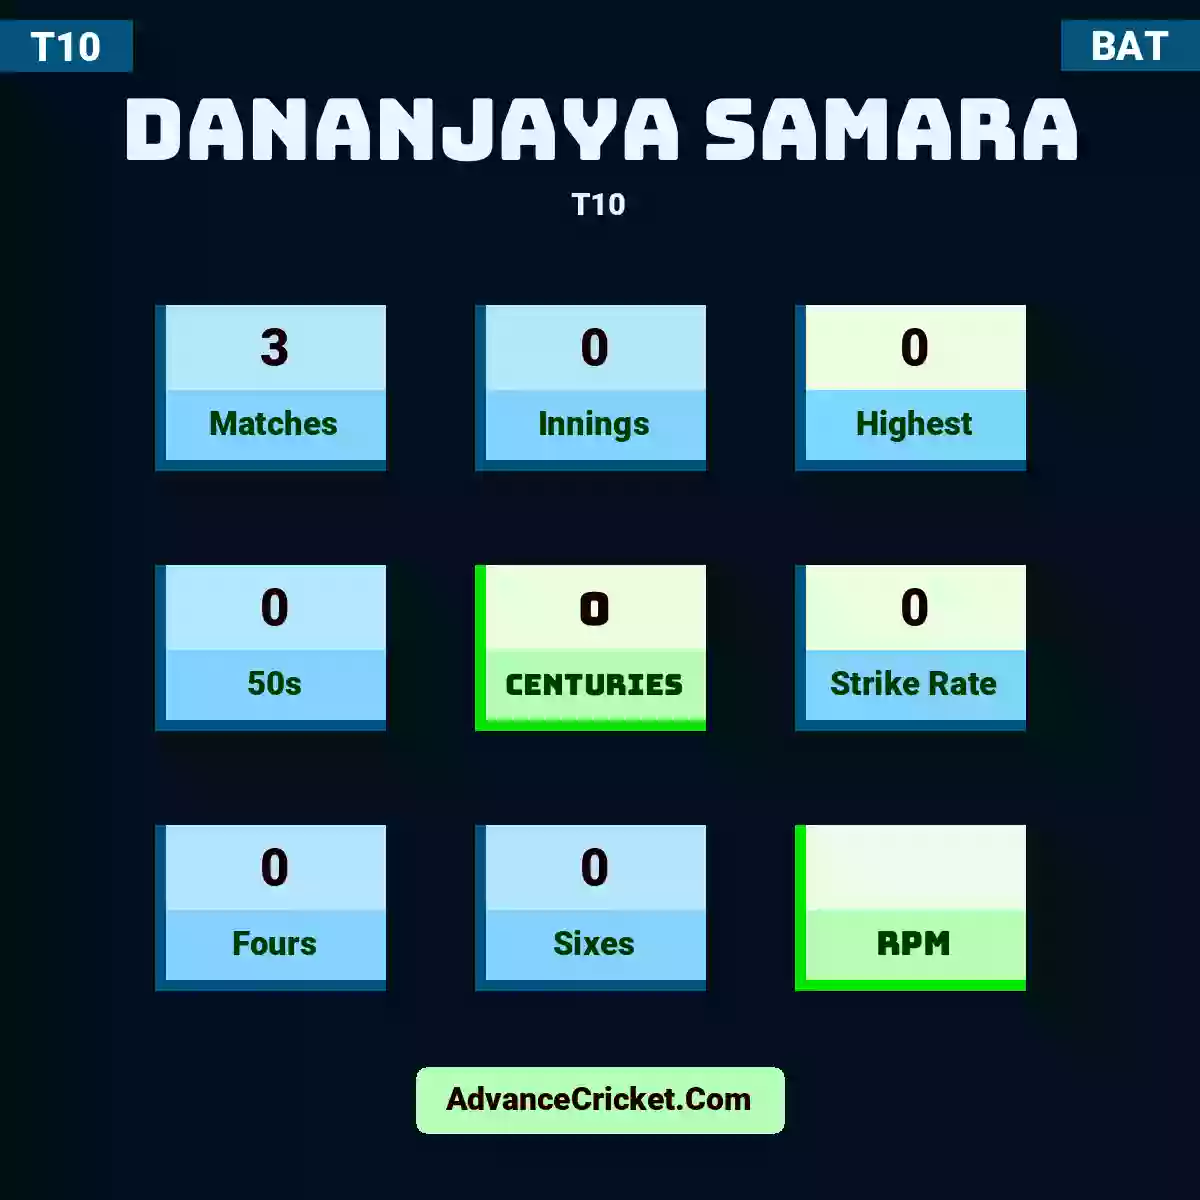 Dananjaya Samara T10 , Dananjaya Samara played 3 matches, scored 0 runs as highest, 0 half-centuries, and 0 centuries, with a strike rate of 0. D.Samara hit 0 fours and 0 sixes.